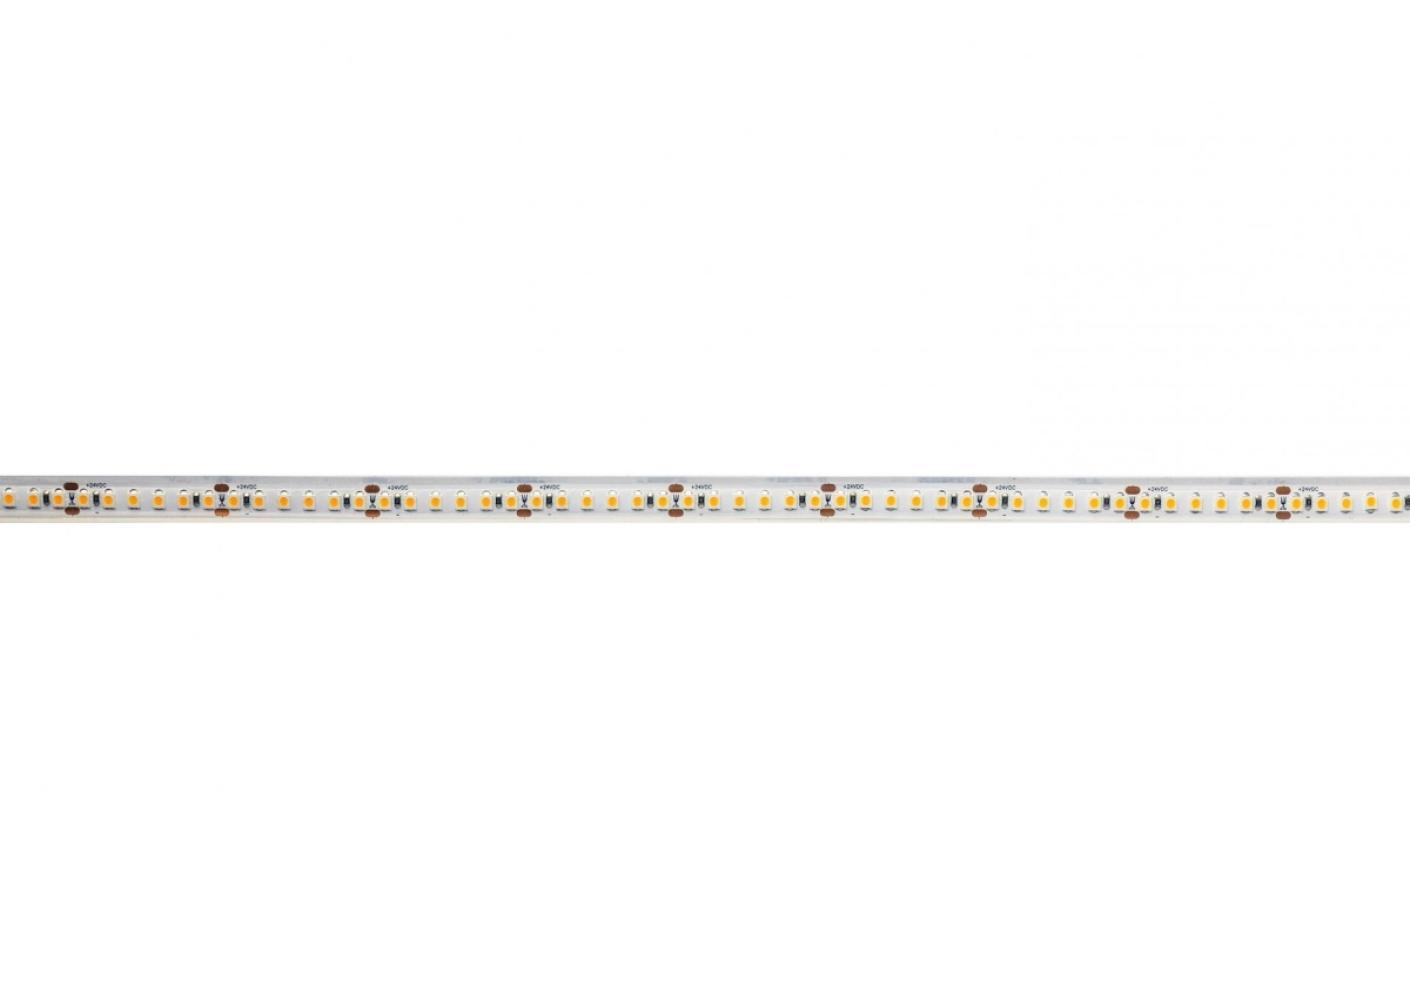 Deko Light 3528 180 24V 2700K 5m Silikon LED Stripe weiß IP67 2600lm >90 Ra 120° Bild 1